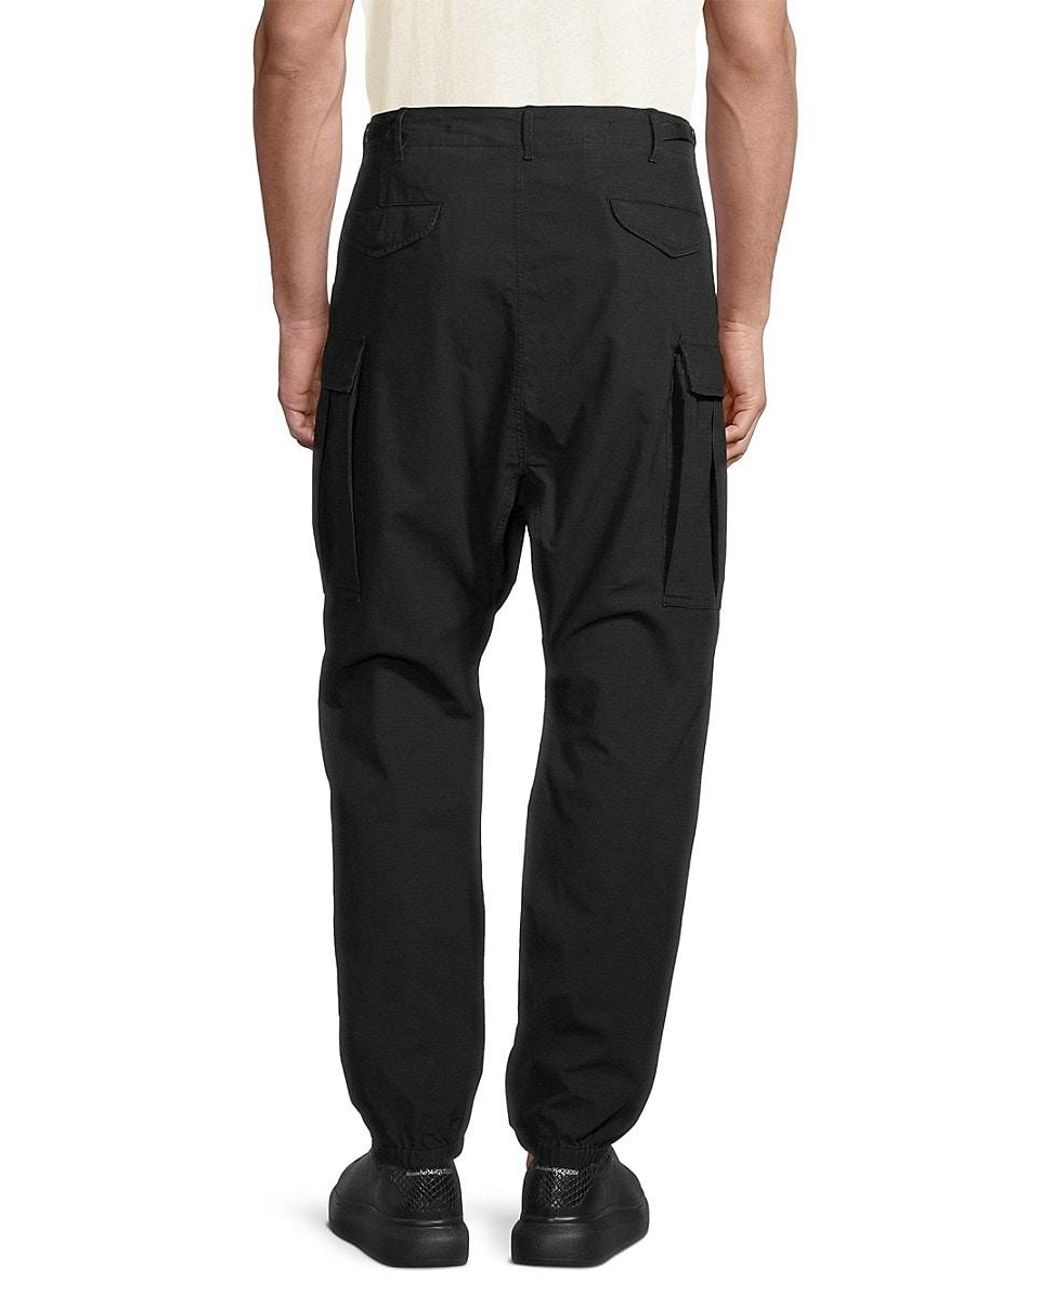 Juebong Men's Cotton Multi-Pockets Drawstring Work Pants Tactical Outdoor Military  Army Cargo Pants,Black,XXXL - Walmart.com